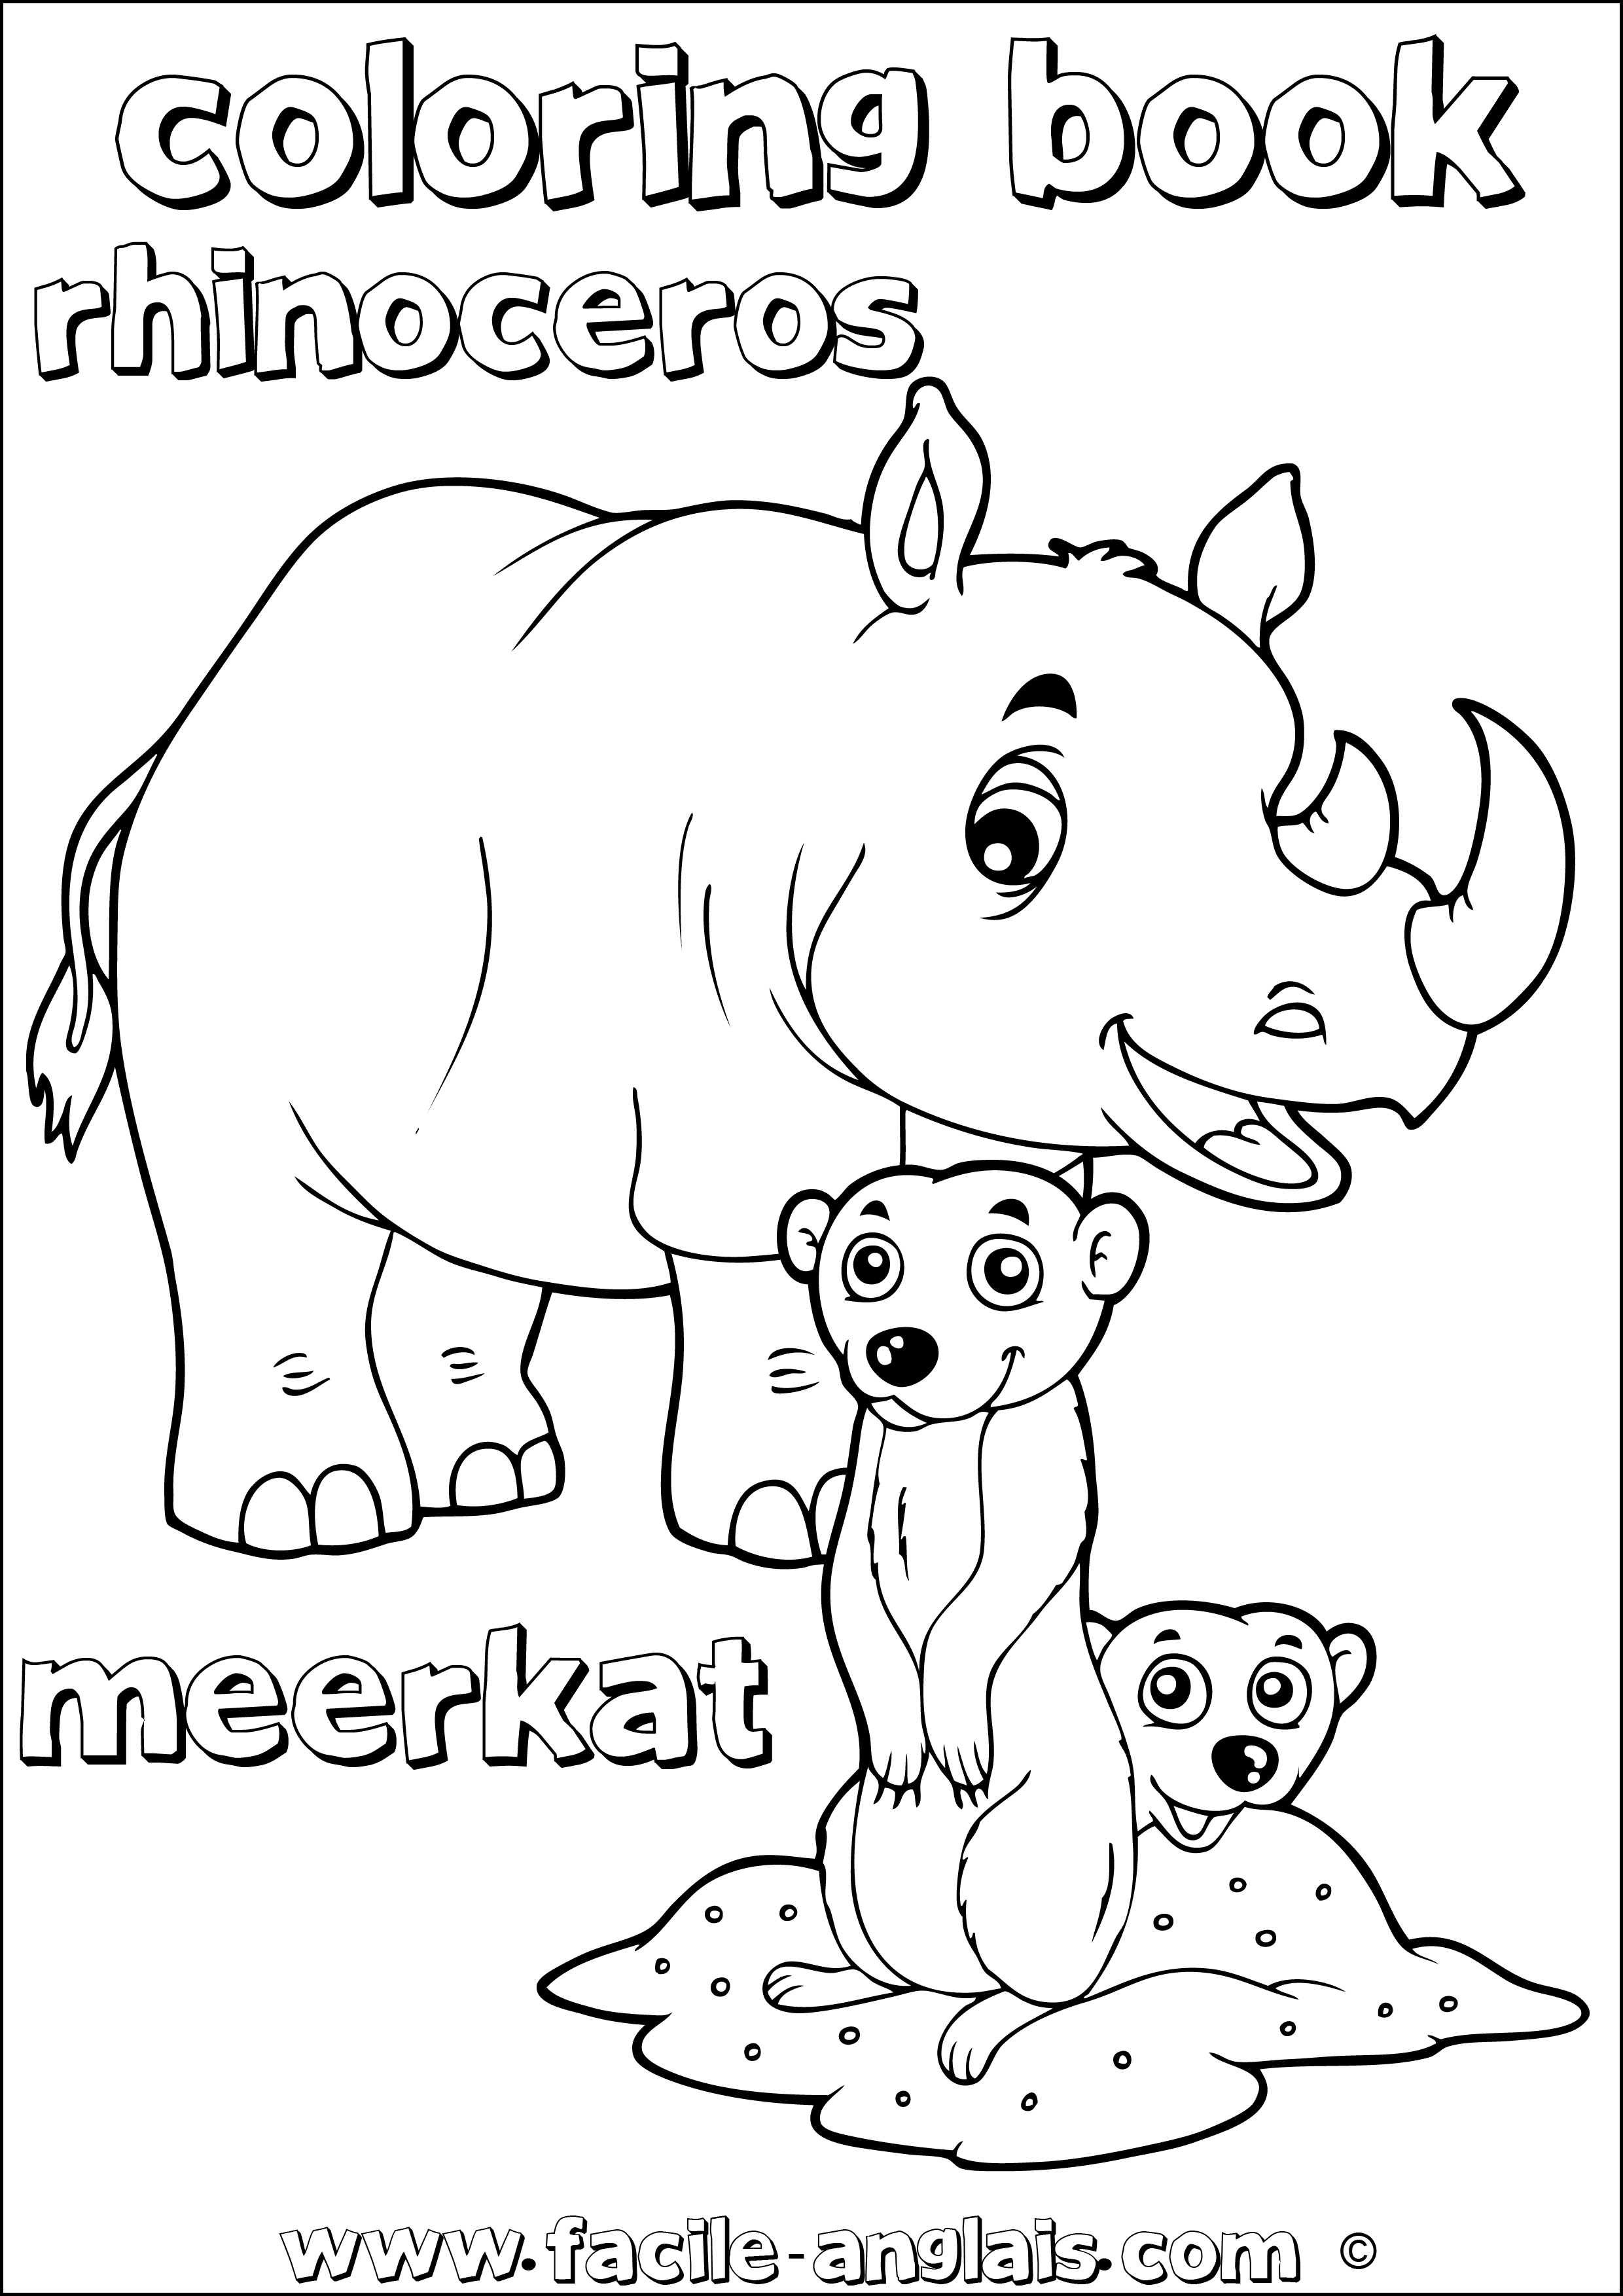 Coloring Book Rhinoceros and Meerkat Coloriage avec un Rhinoceros et un Suricate